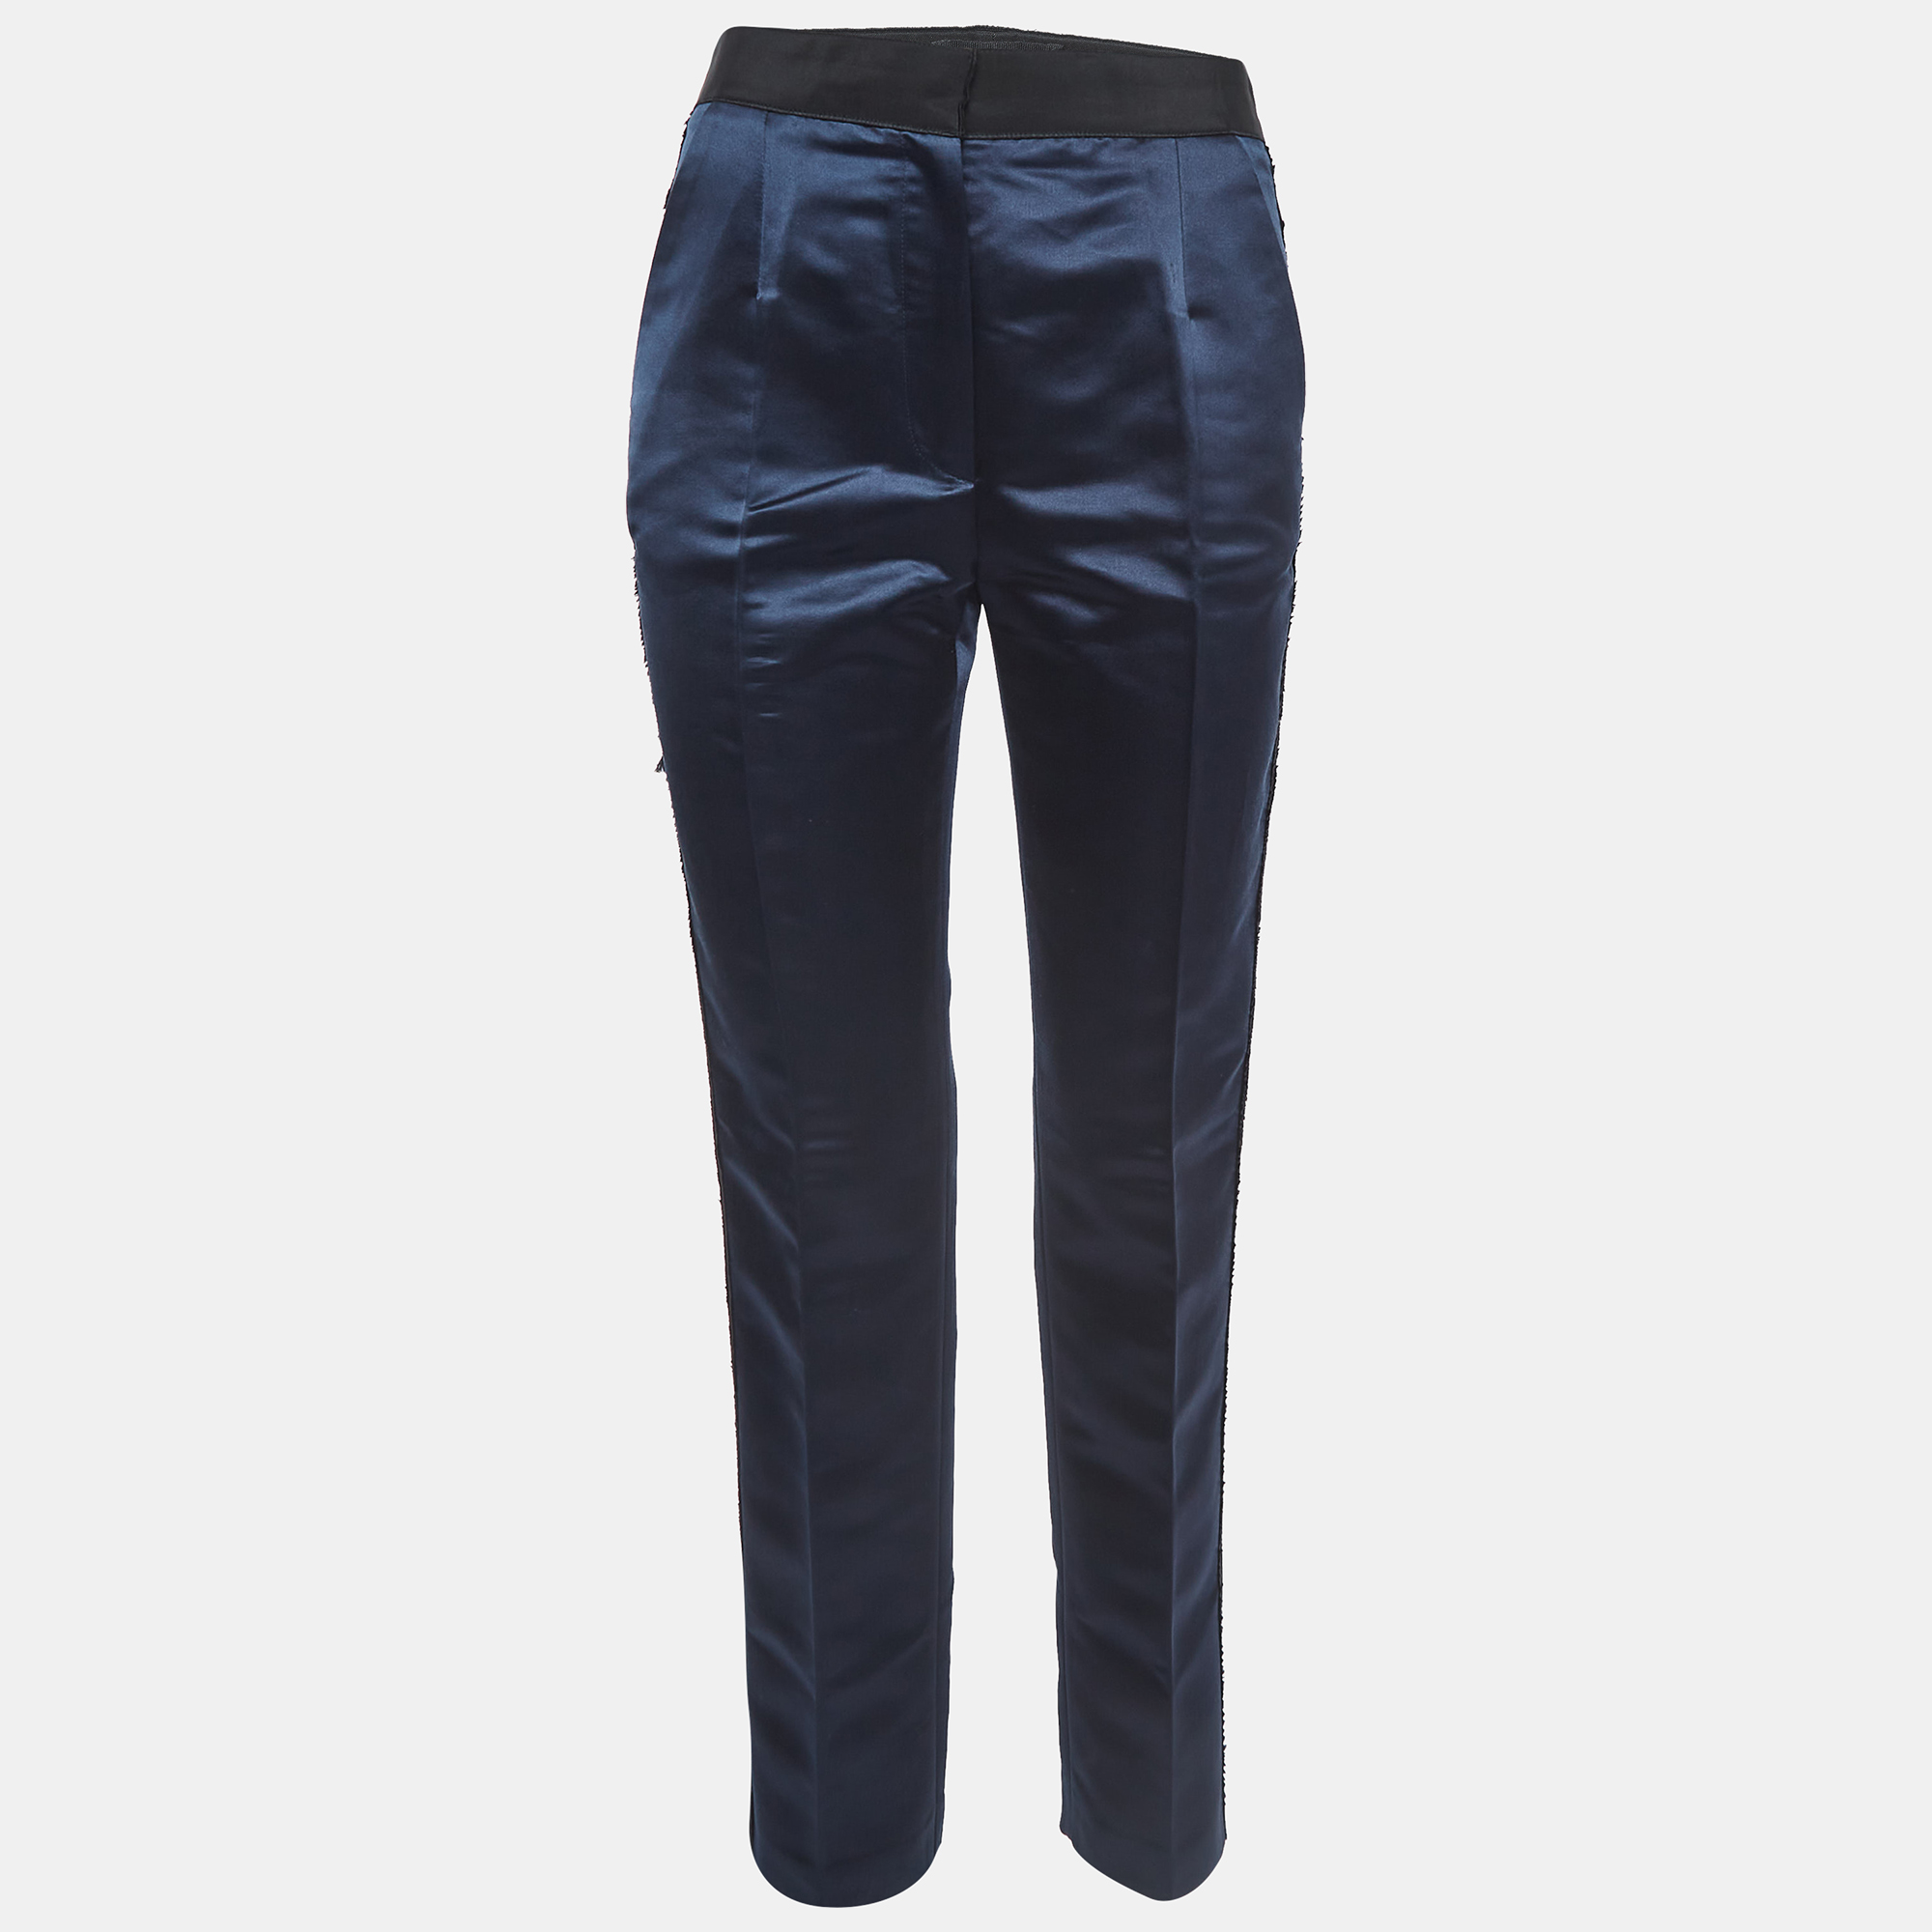 Dolce & gabbana navy blue side stripe satin trousers s